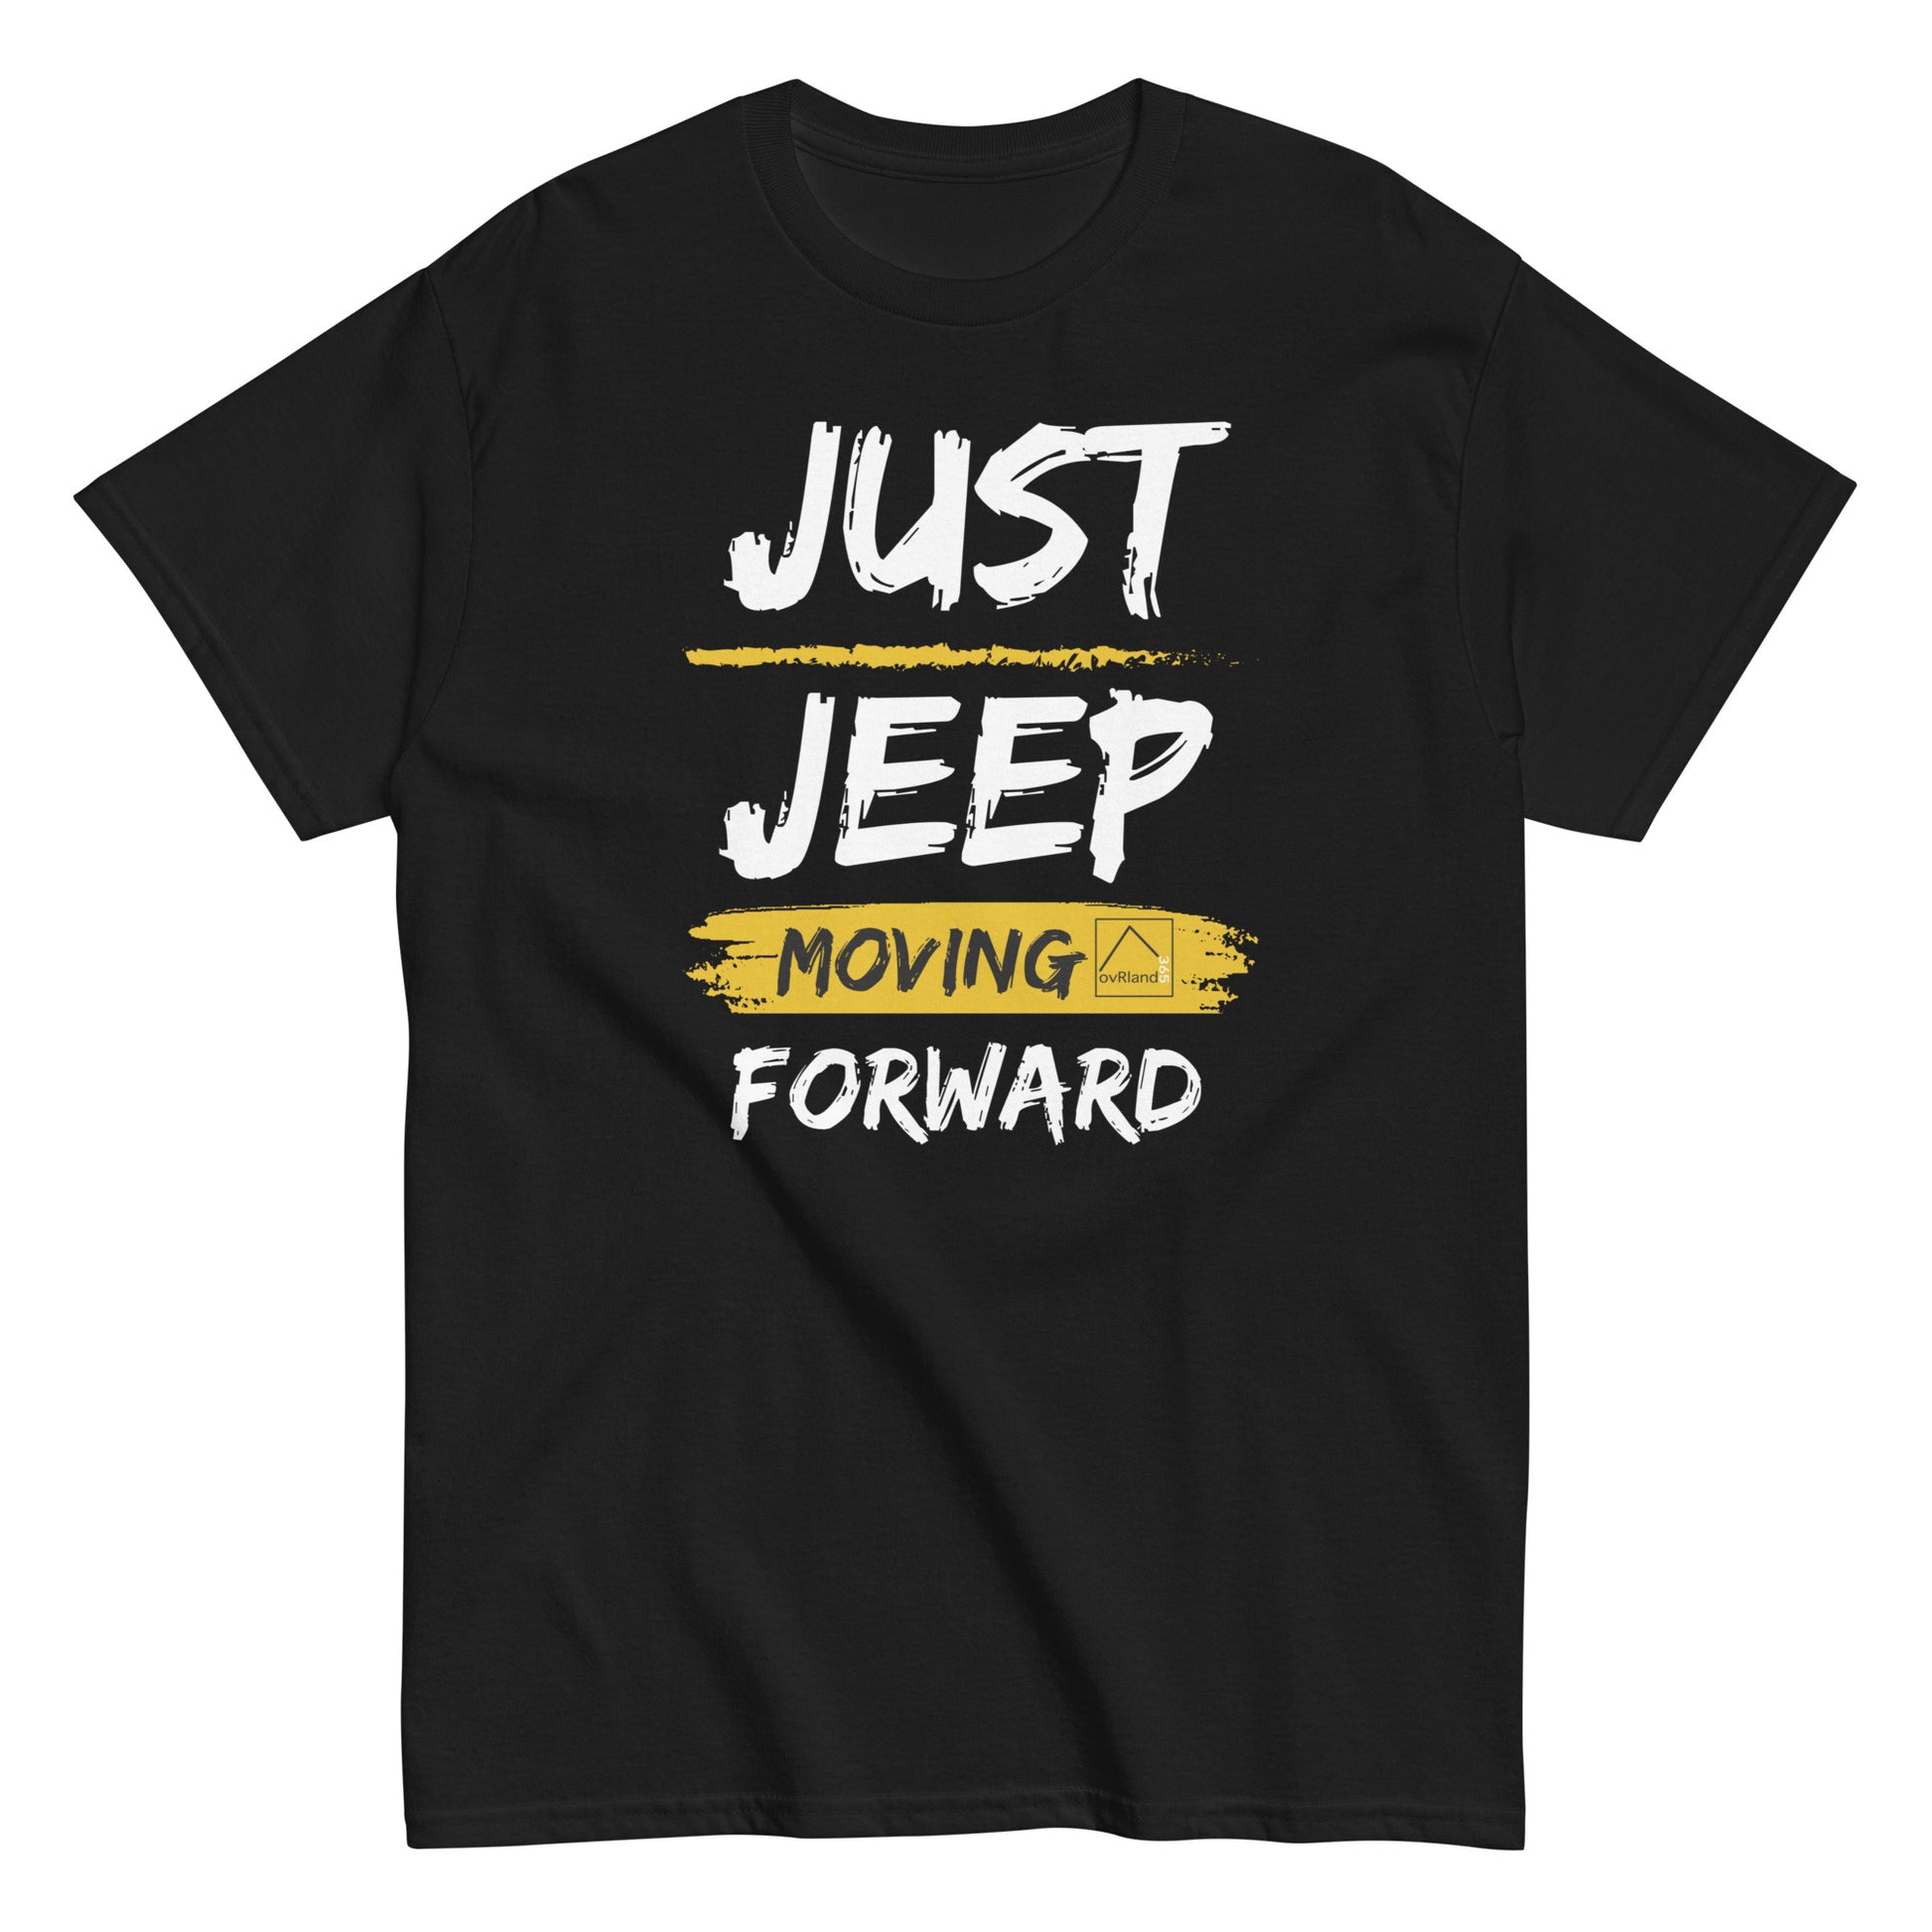 Just JEEP Moving Forward! Black Shirt. overland365.com